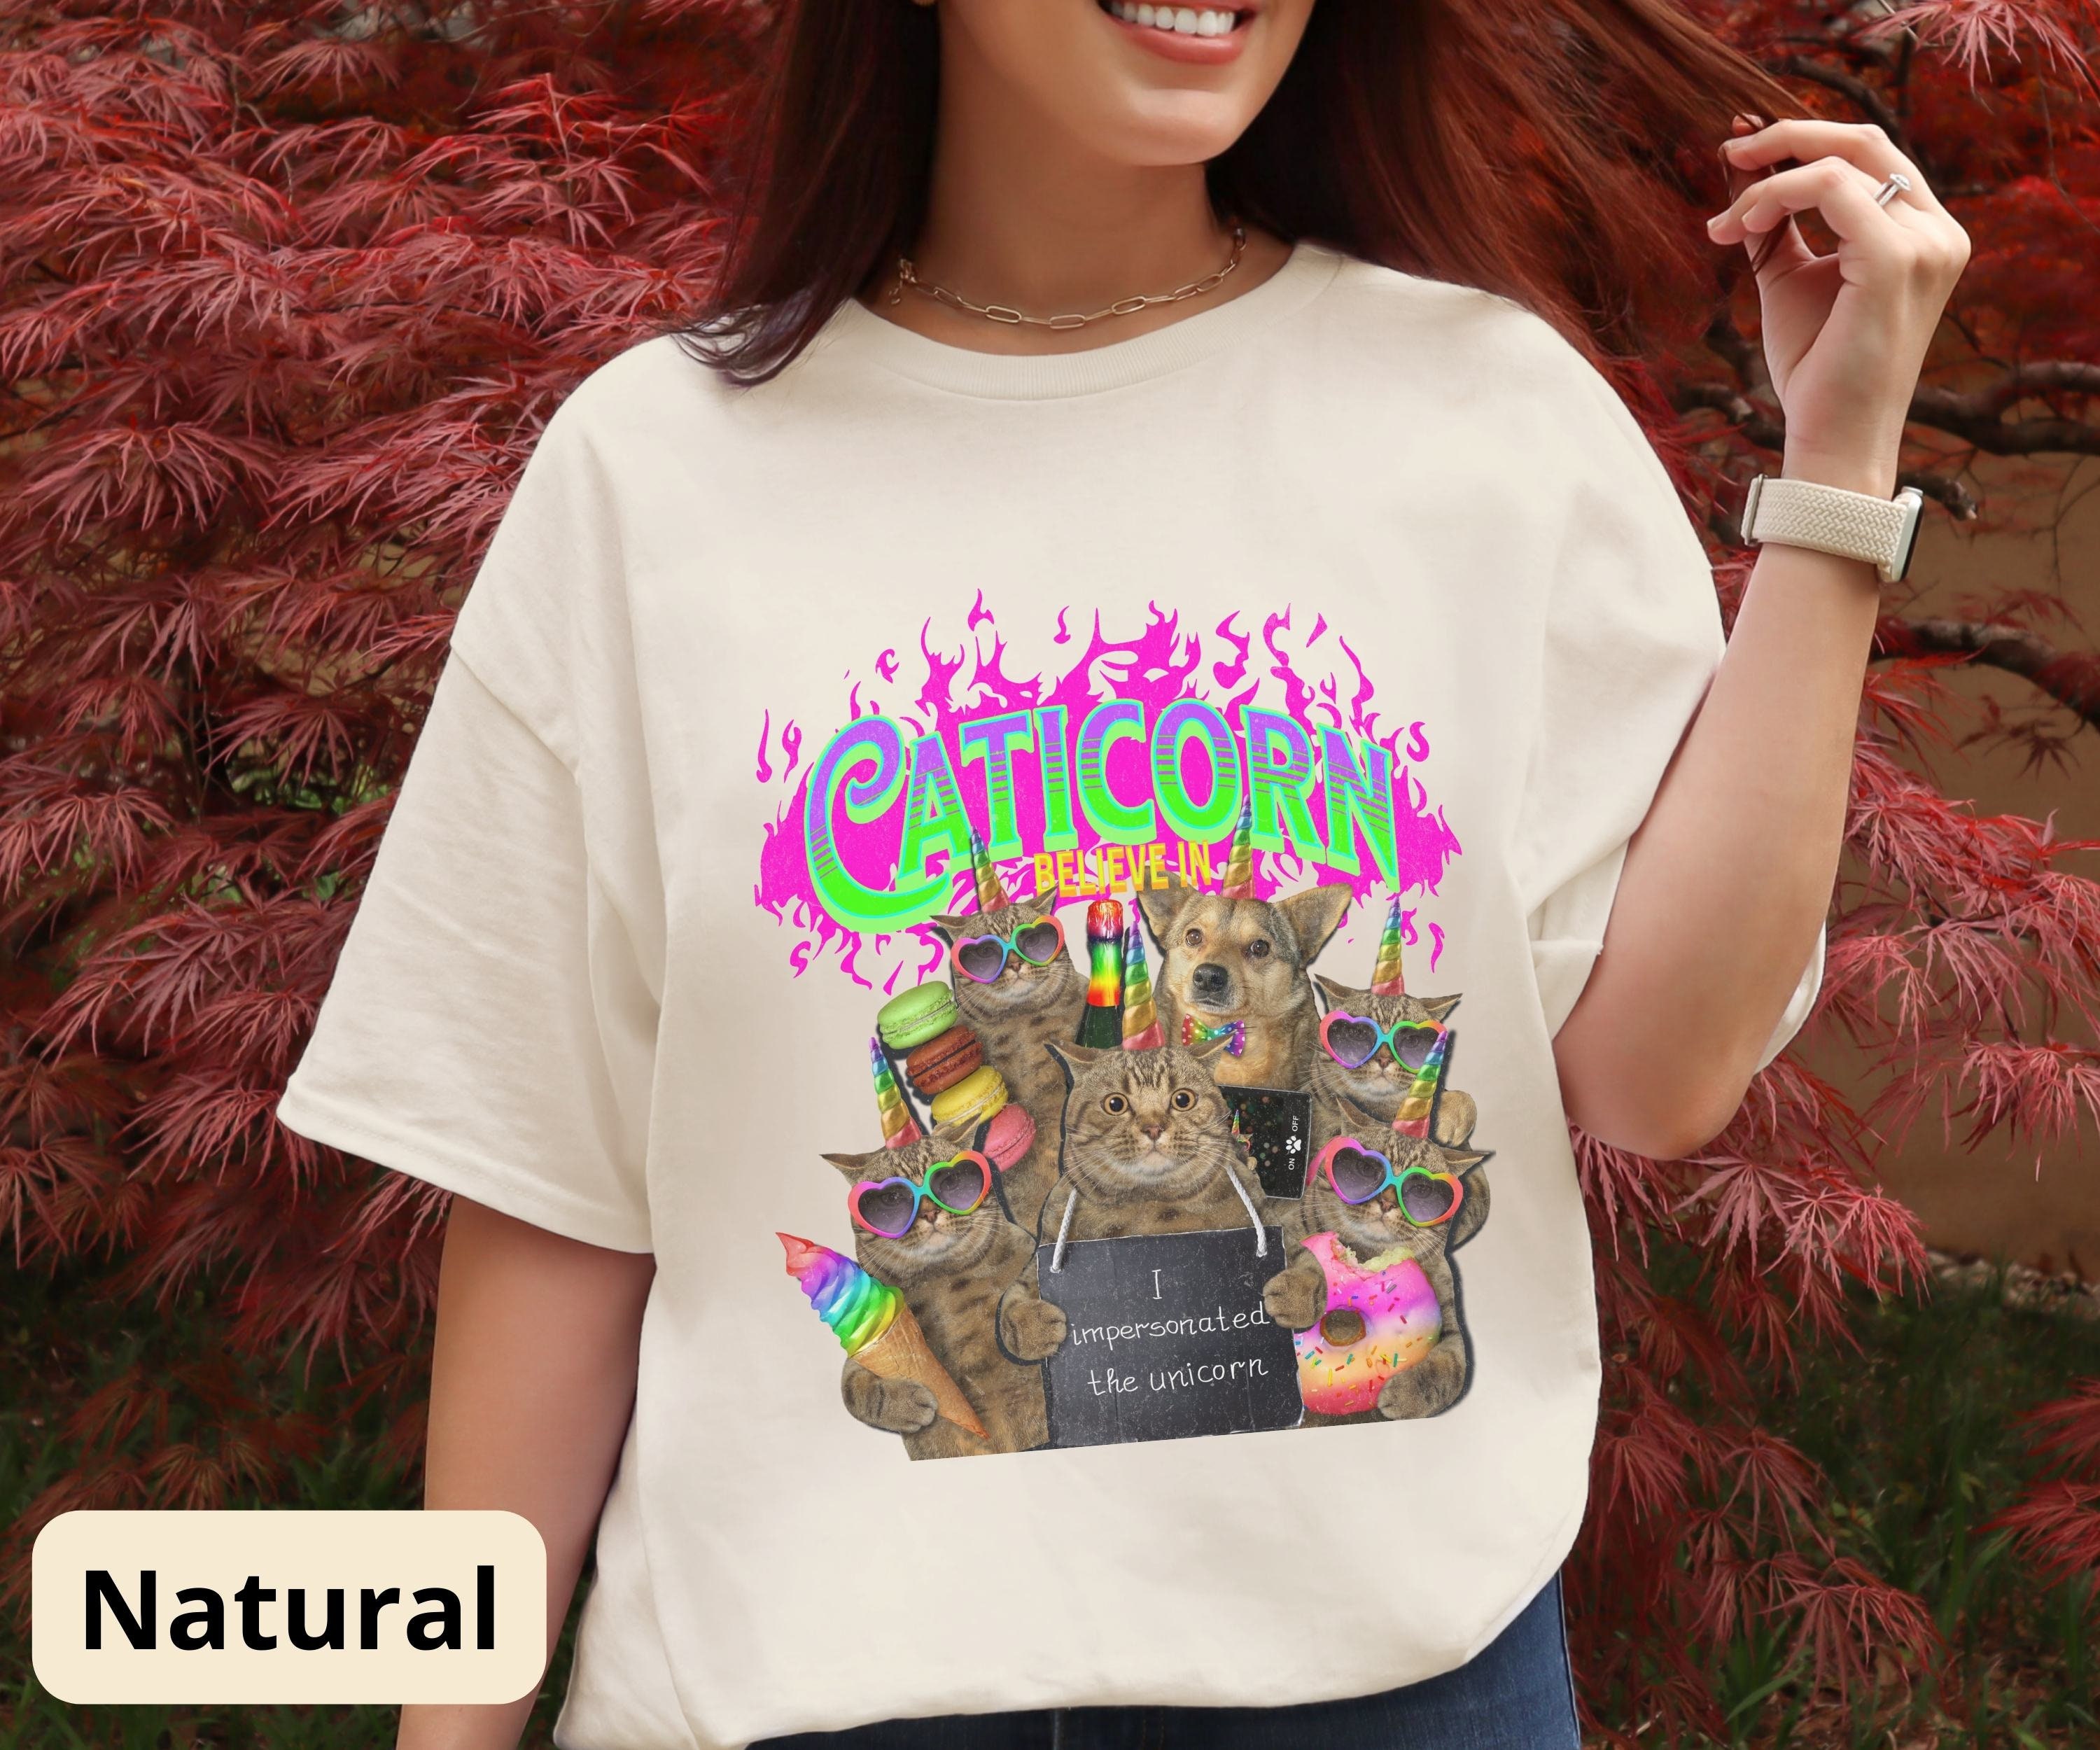 Custom Pet Dog Cat Bootleg Rap Tee, Custom Your Own Bootleg Shirts